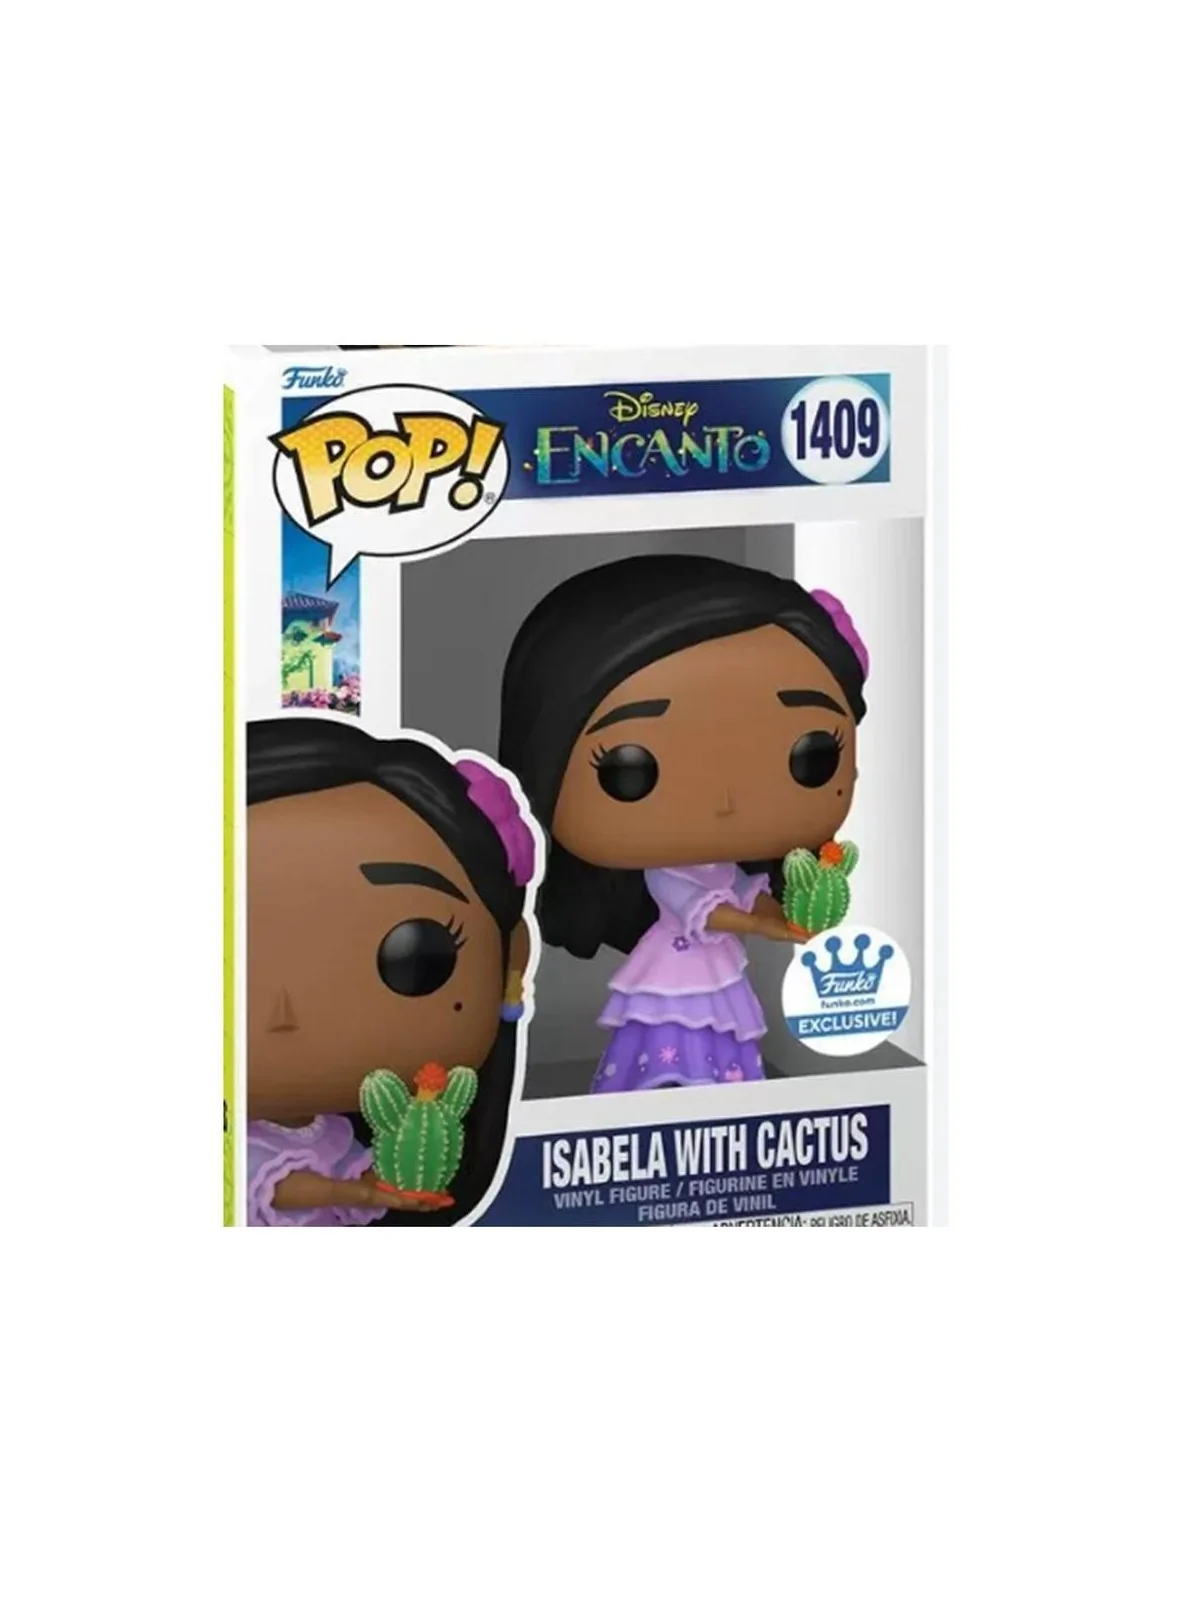 Comprar Funko POP! Disney Encanto: Isabela with Cactus (1409) barato a